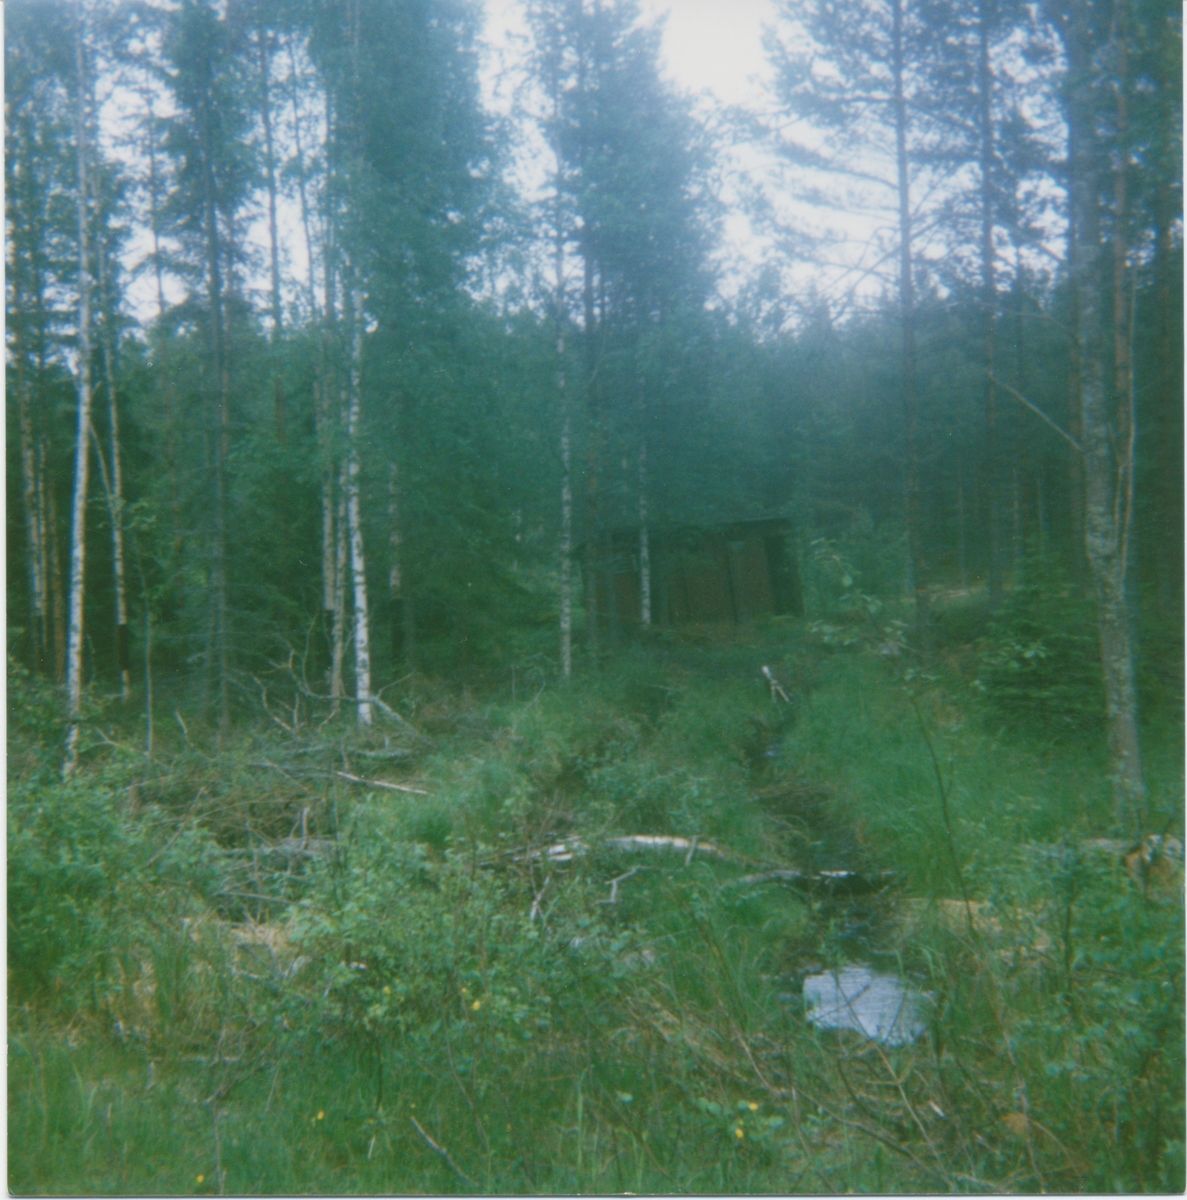 Fra Älgberget i Dalarna (Sverge) i 1991. Bildet er tatt under en tur Eilert Pedersen hadde dit, 56 år etter at han var der sist.